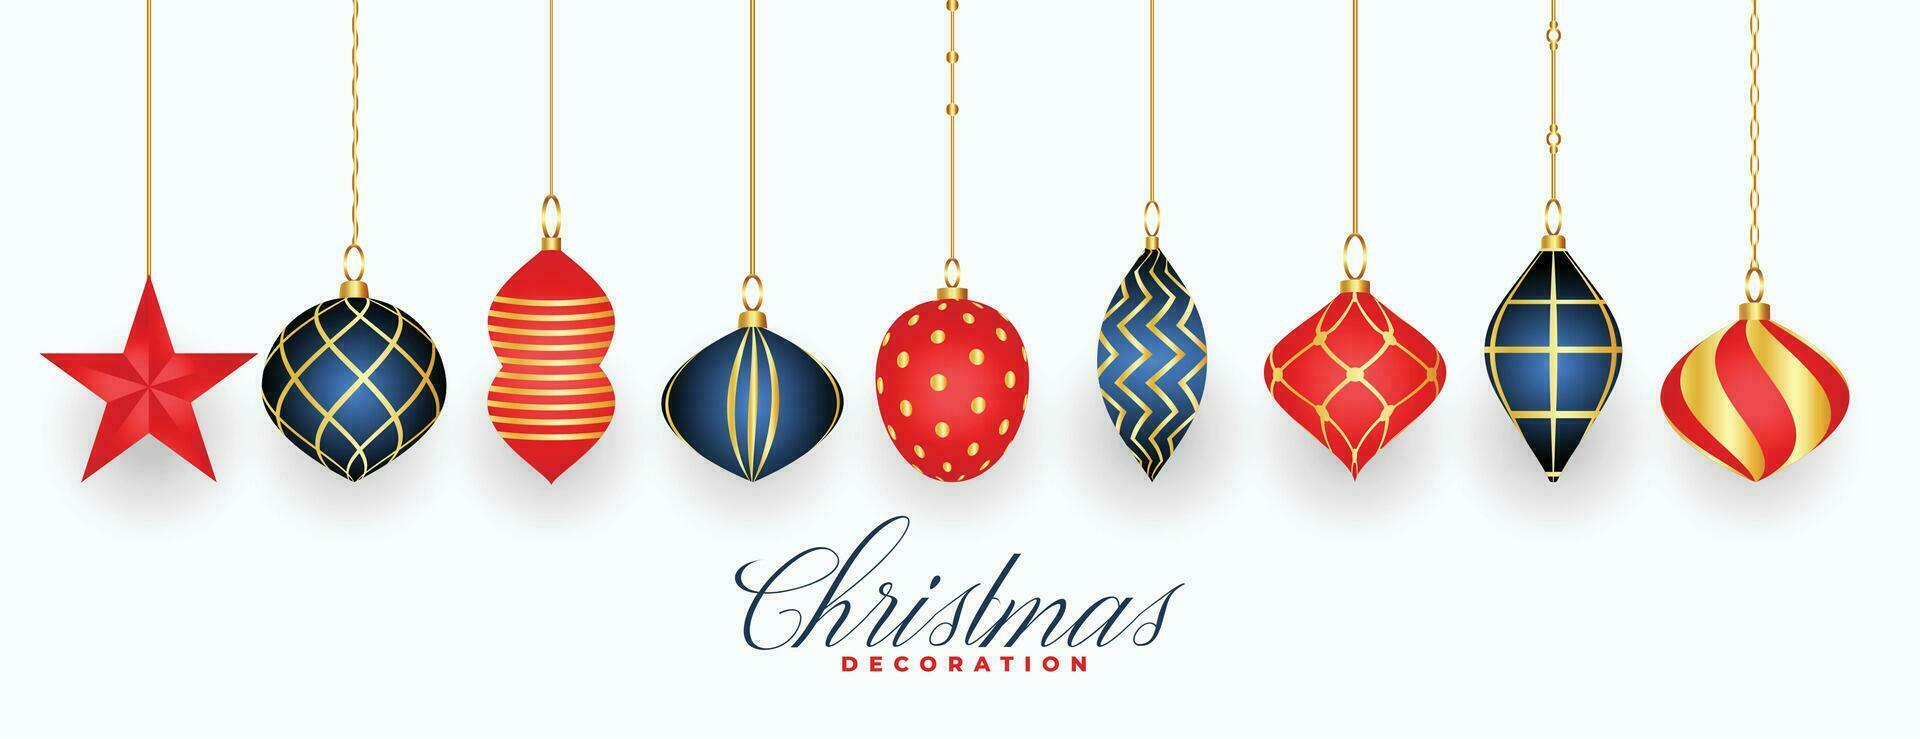 verzameling van Kerstmis snuisterij voor Kerstmis vakantie ontwerp vector